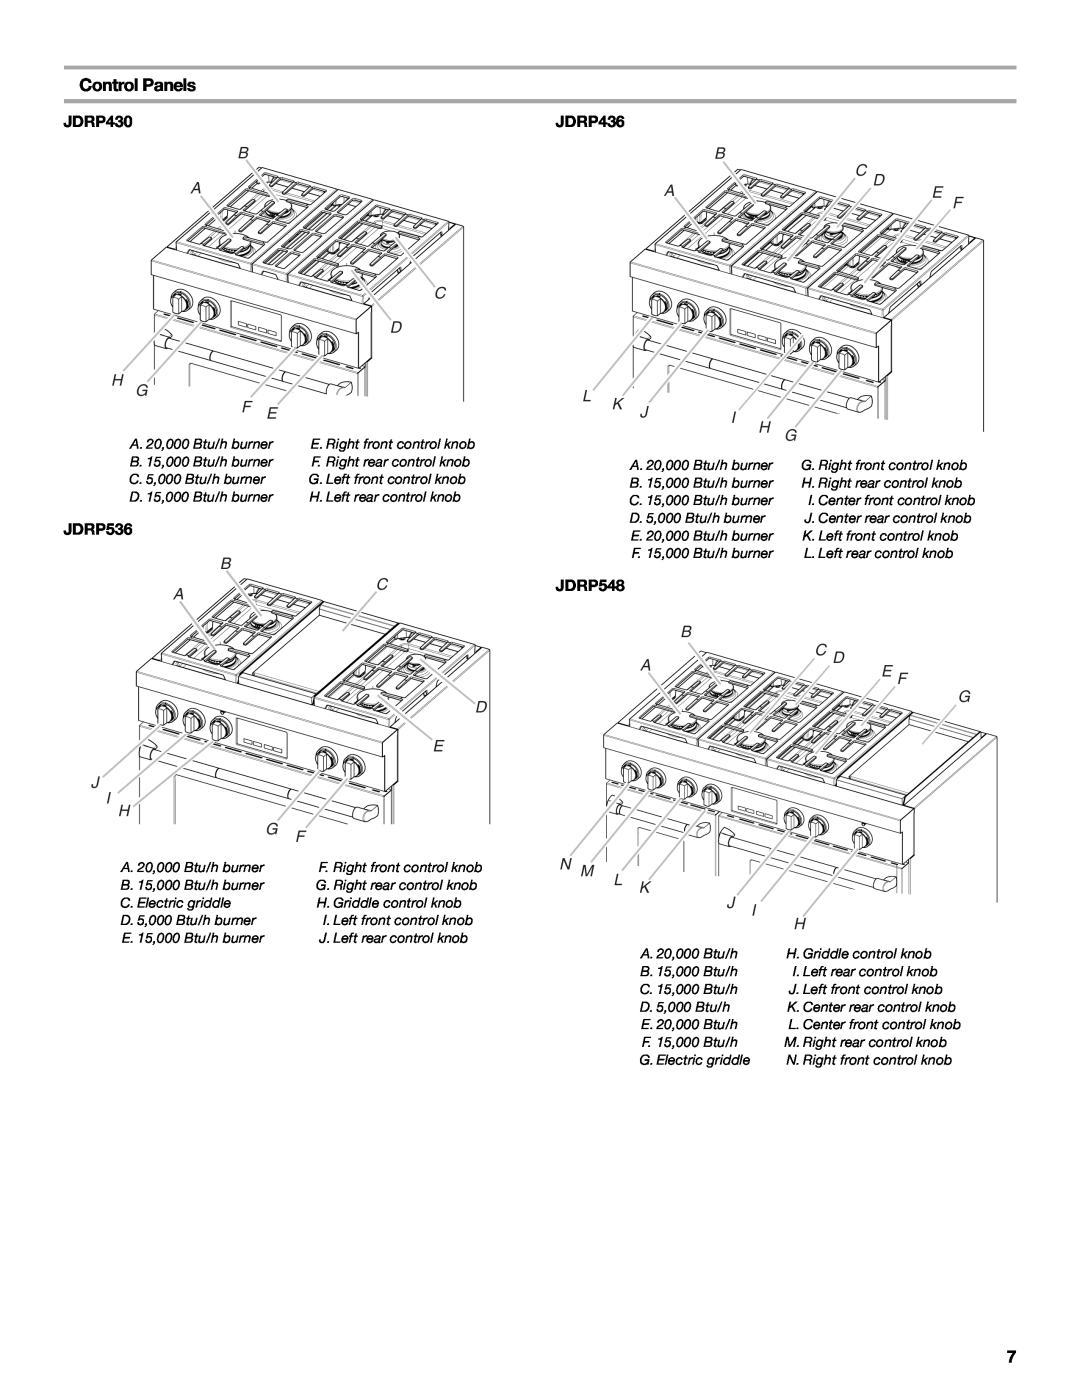 Jenn-Air JDRP430 manual Control Panels, B A G F E, B C D A E F, N M L K J H 